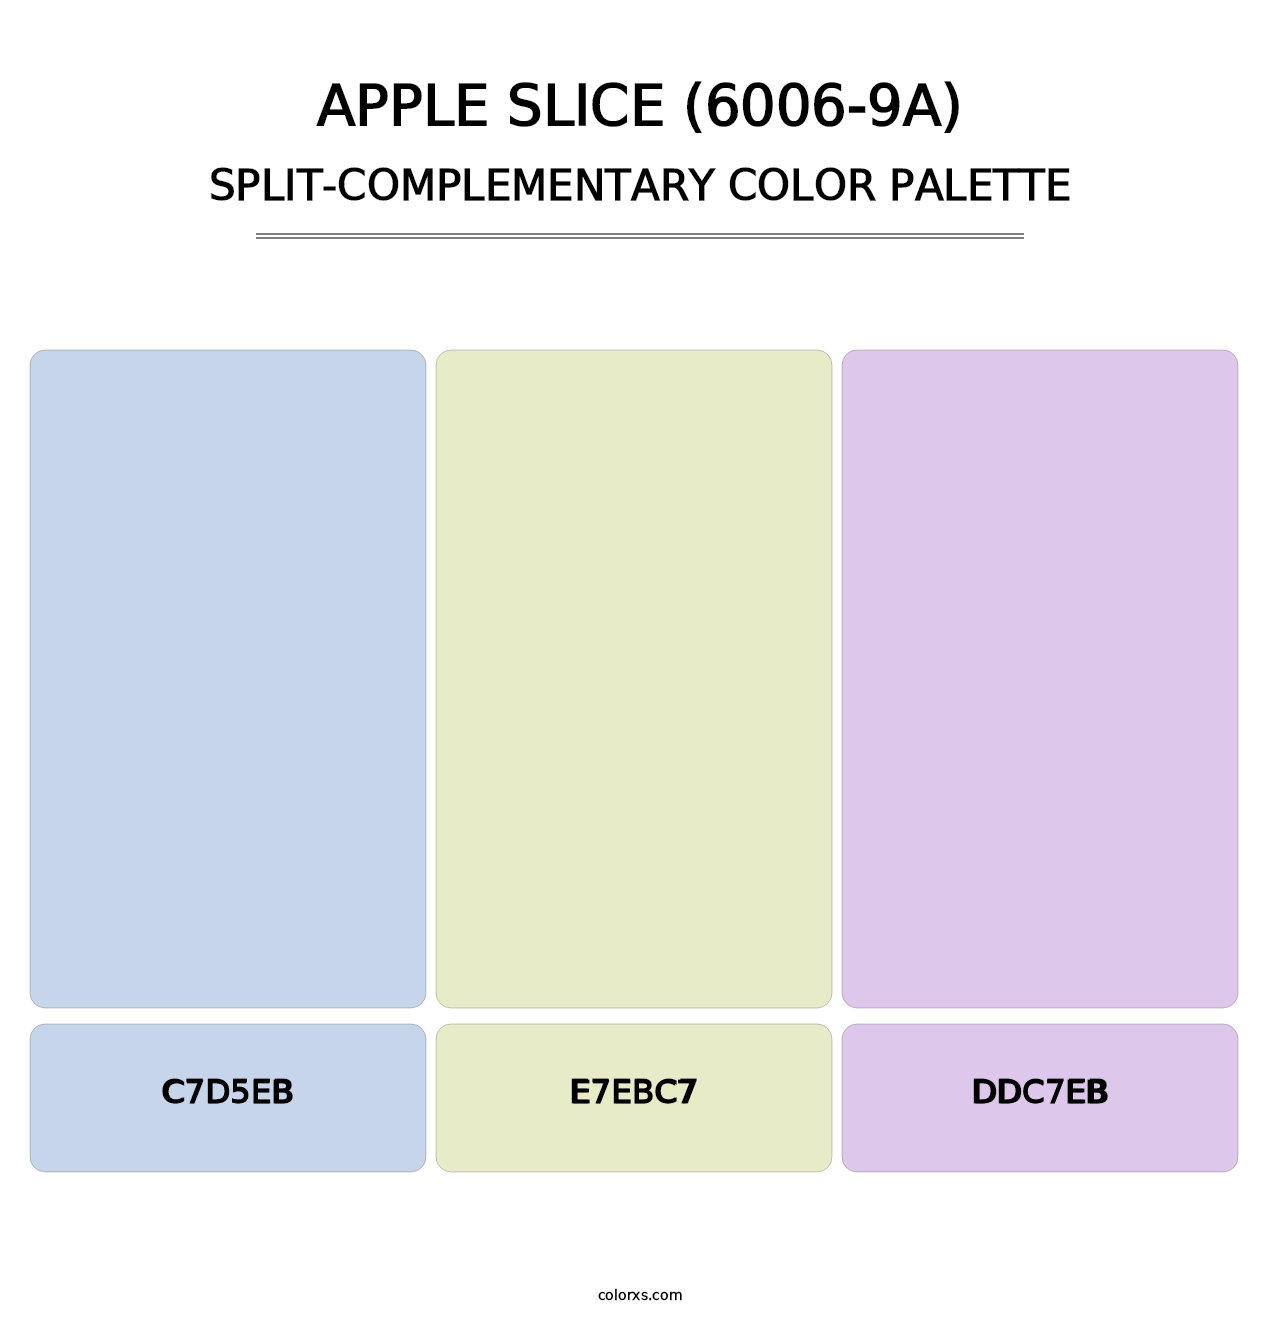 Apple Slice (6006-9A) - Split-Complementary Color Palette